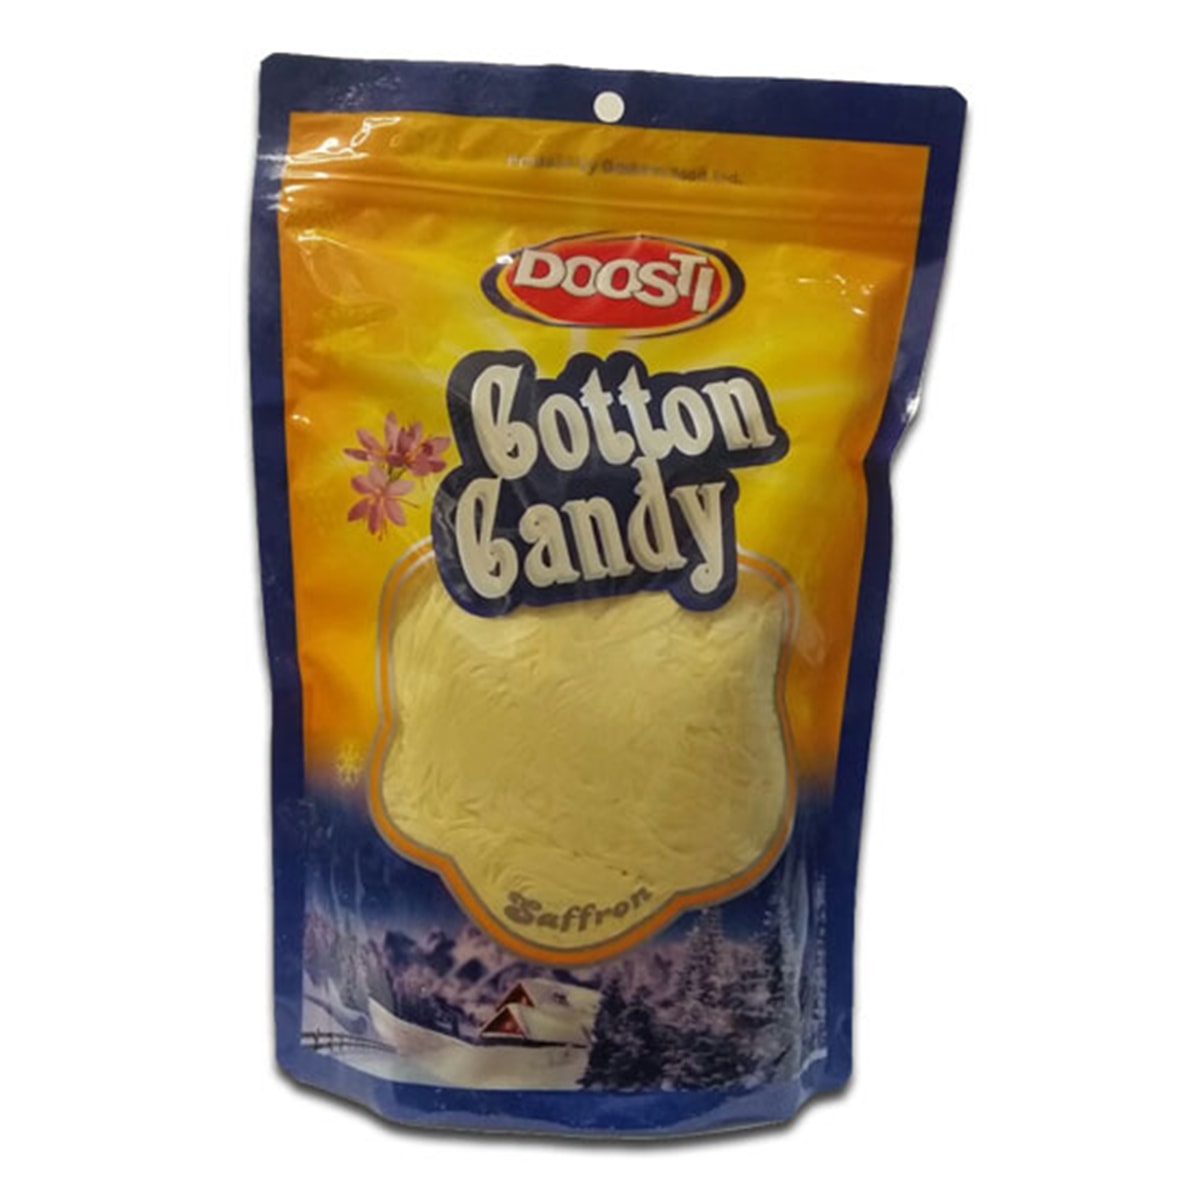 Buy Doosti Persian Fairy Floss or Pashmak or Cotton Candy (Yellow Saffron) - 350 gm